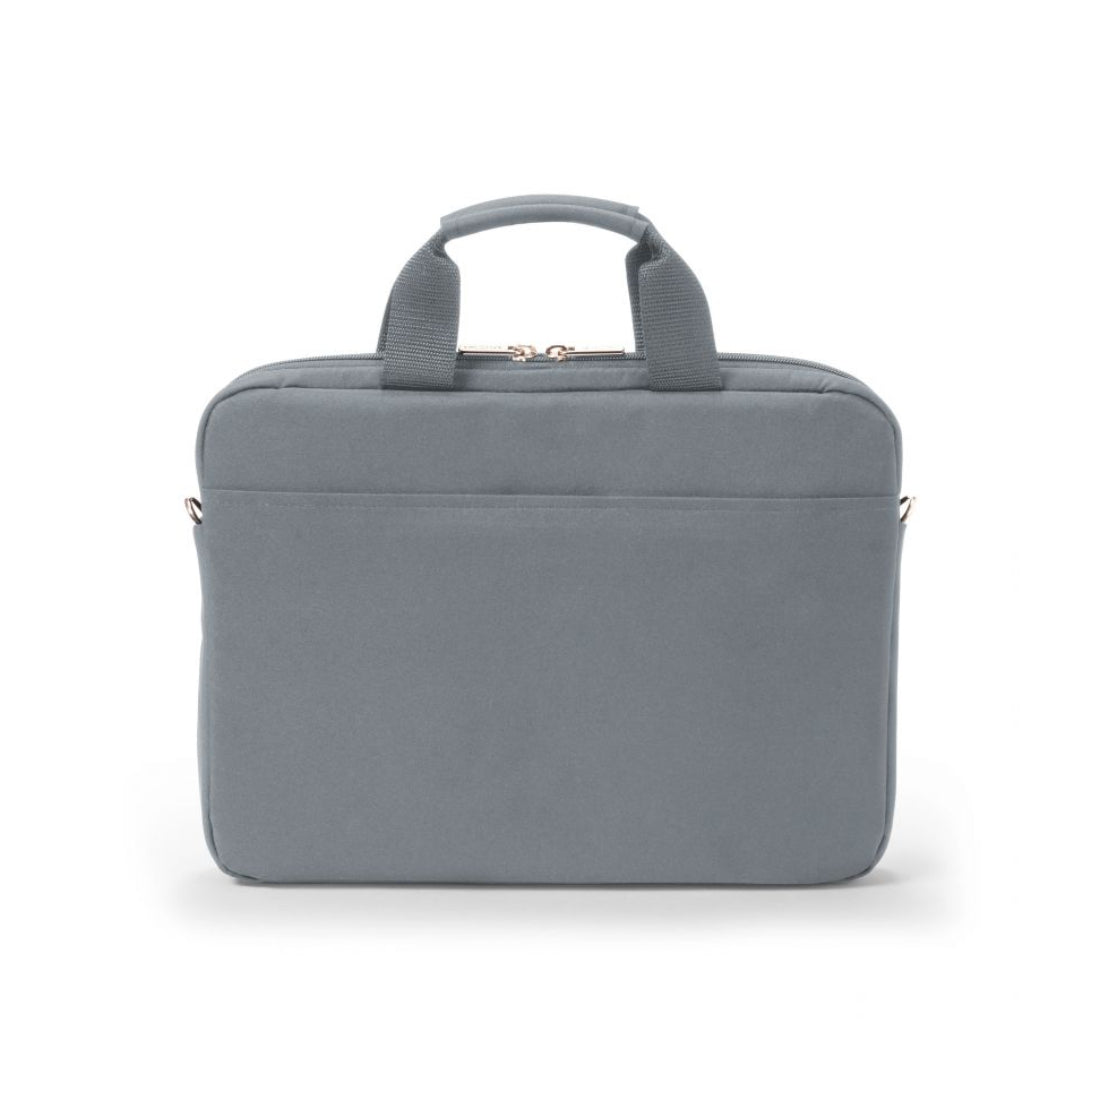 Dicota Base Eco Slim Laptop Case 12 - 13.3” - Grey - حقيبة لابتوب - Store 974 | ستور ٩٧٤